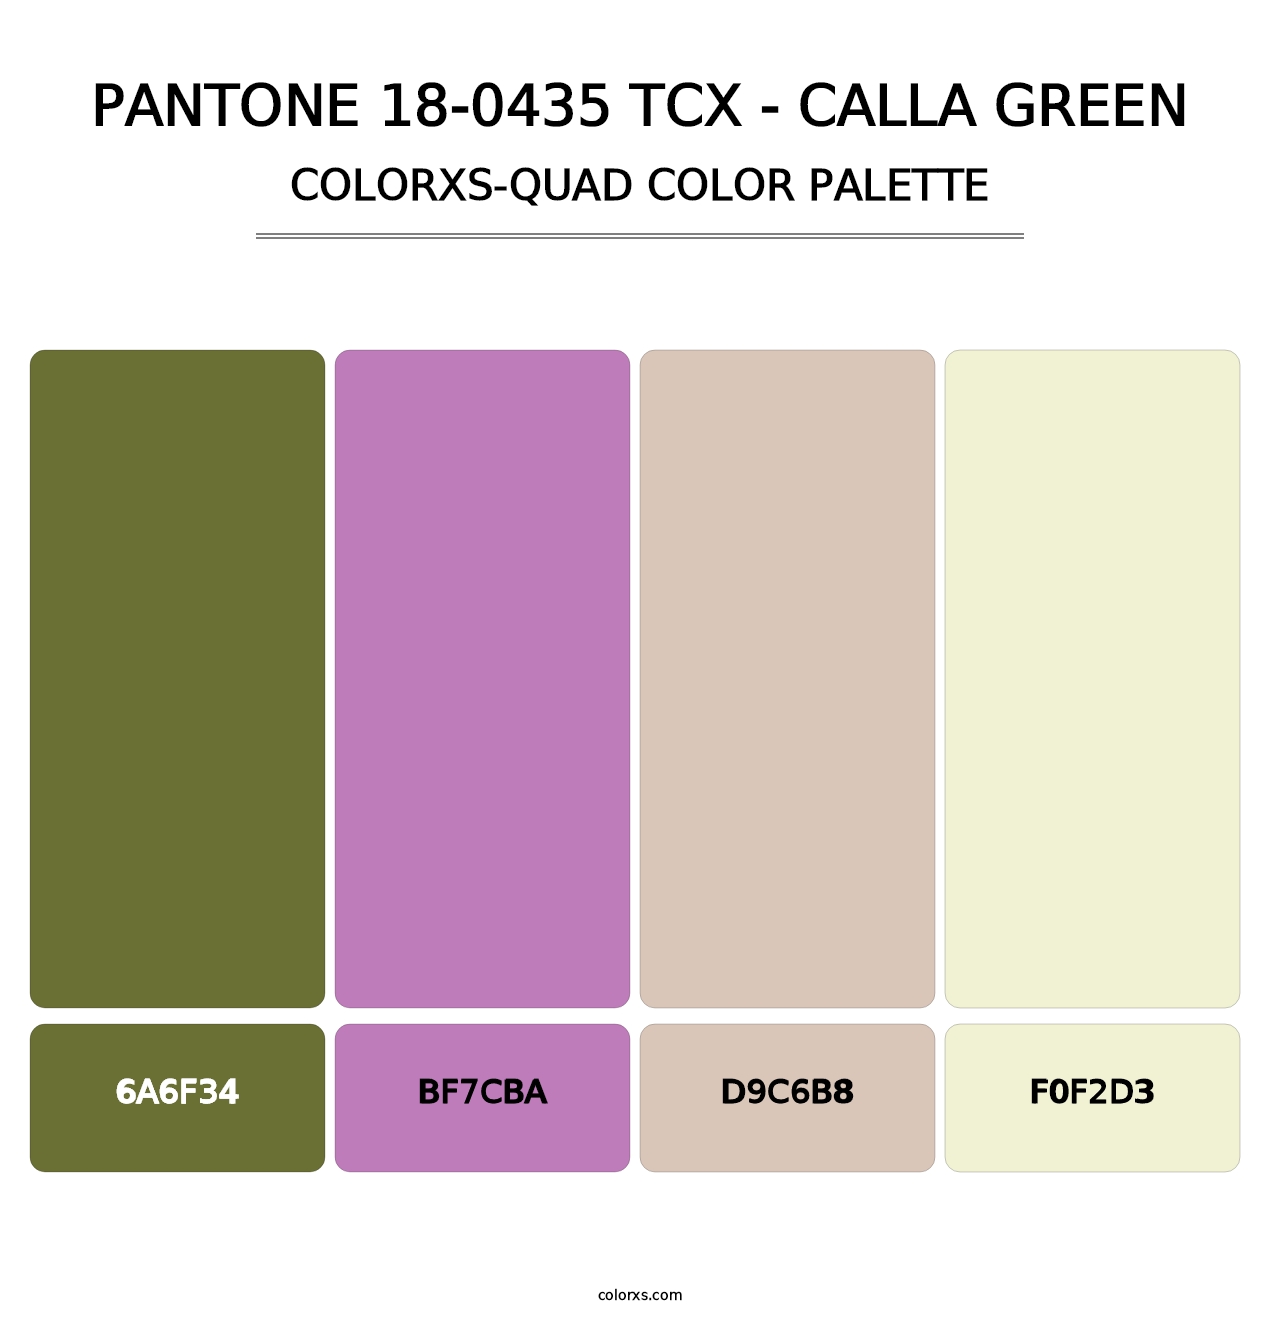 PANTONE 18-0435 TCX - Calla Green - Colorxs Quad Palette